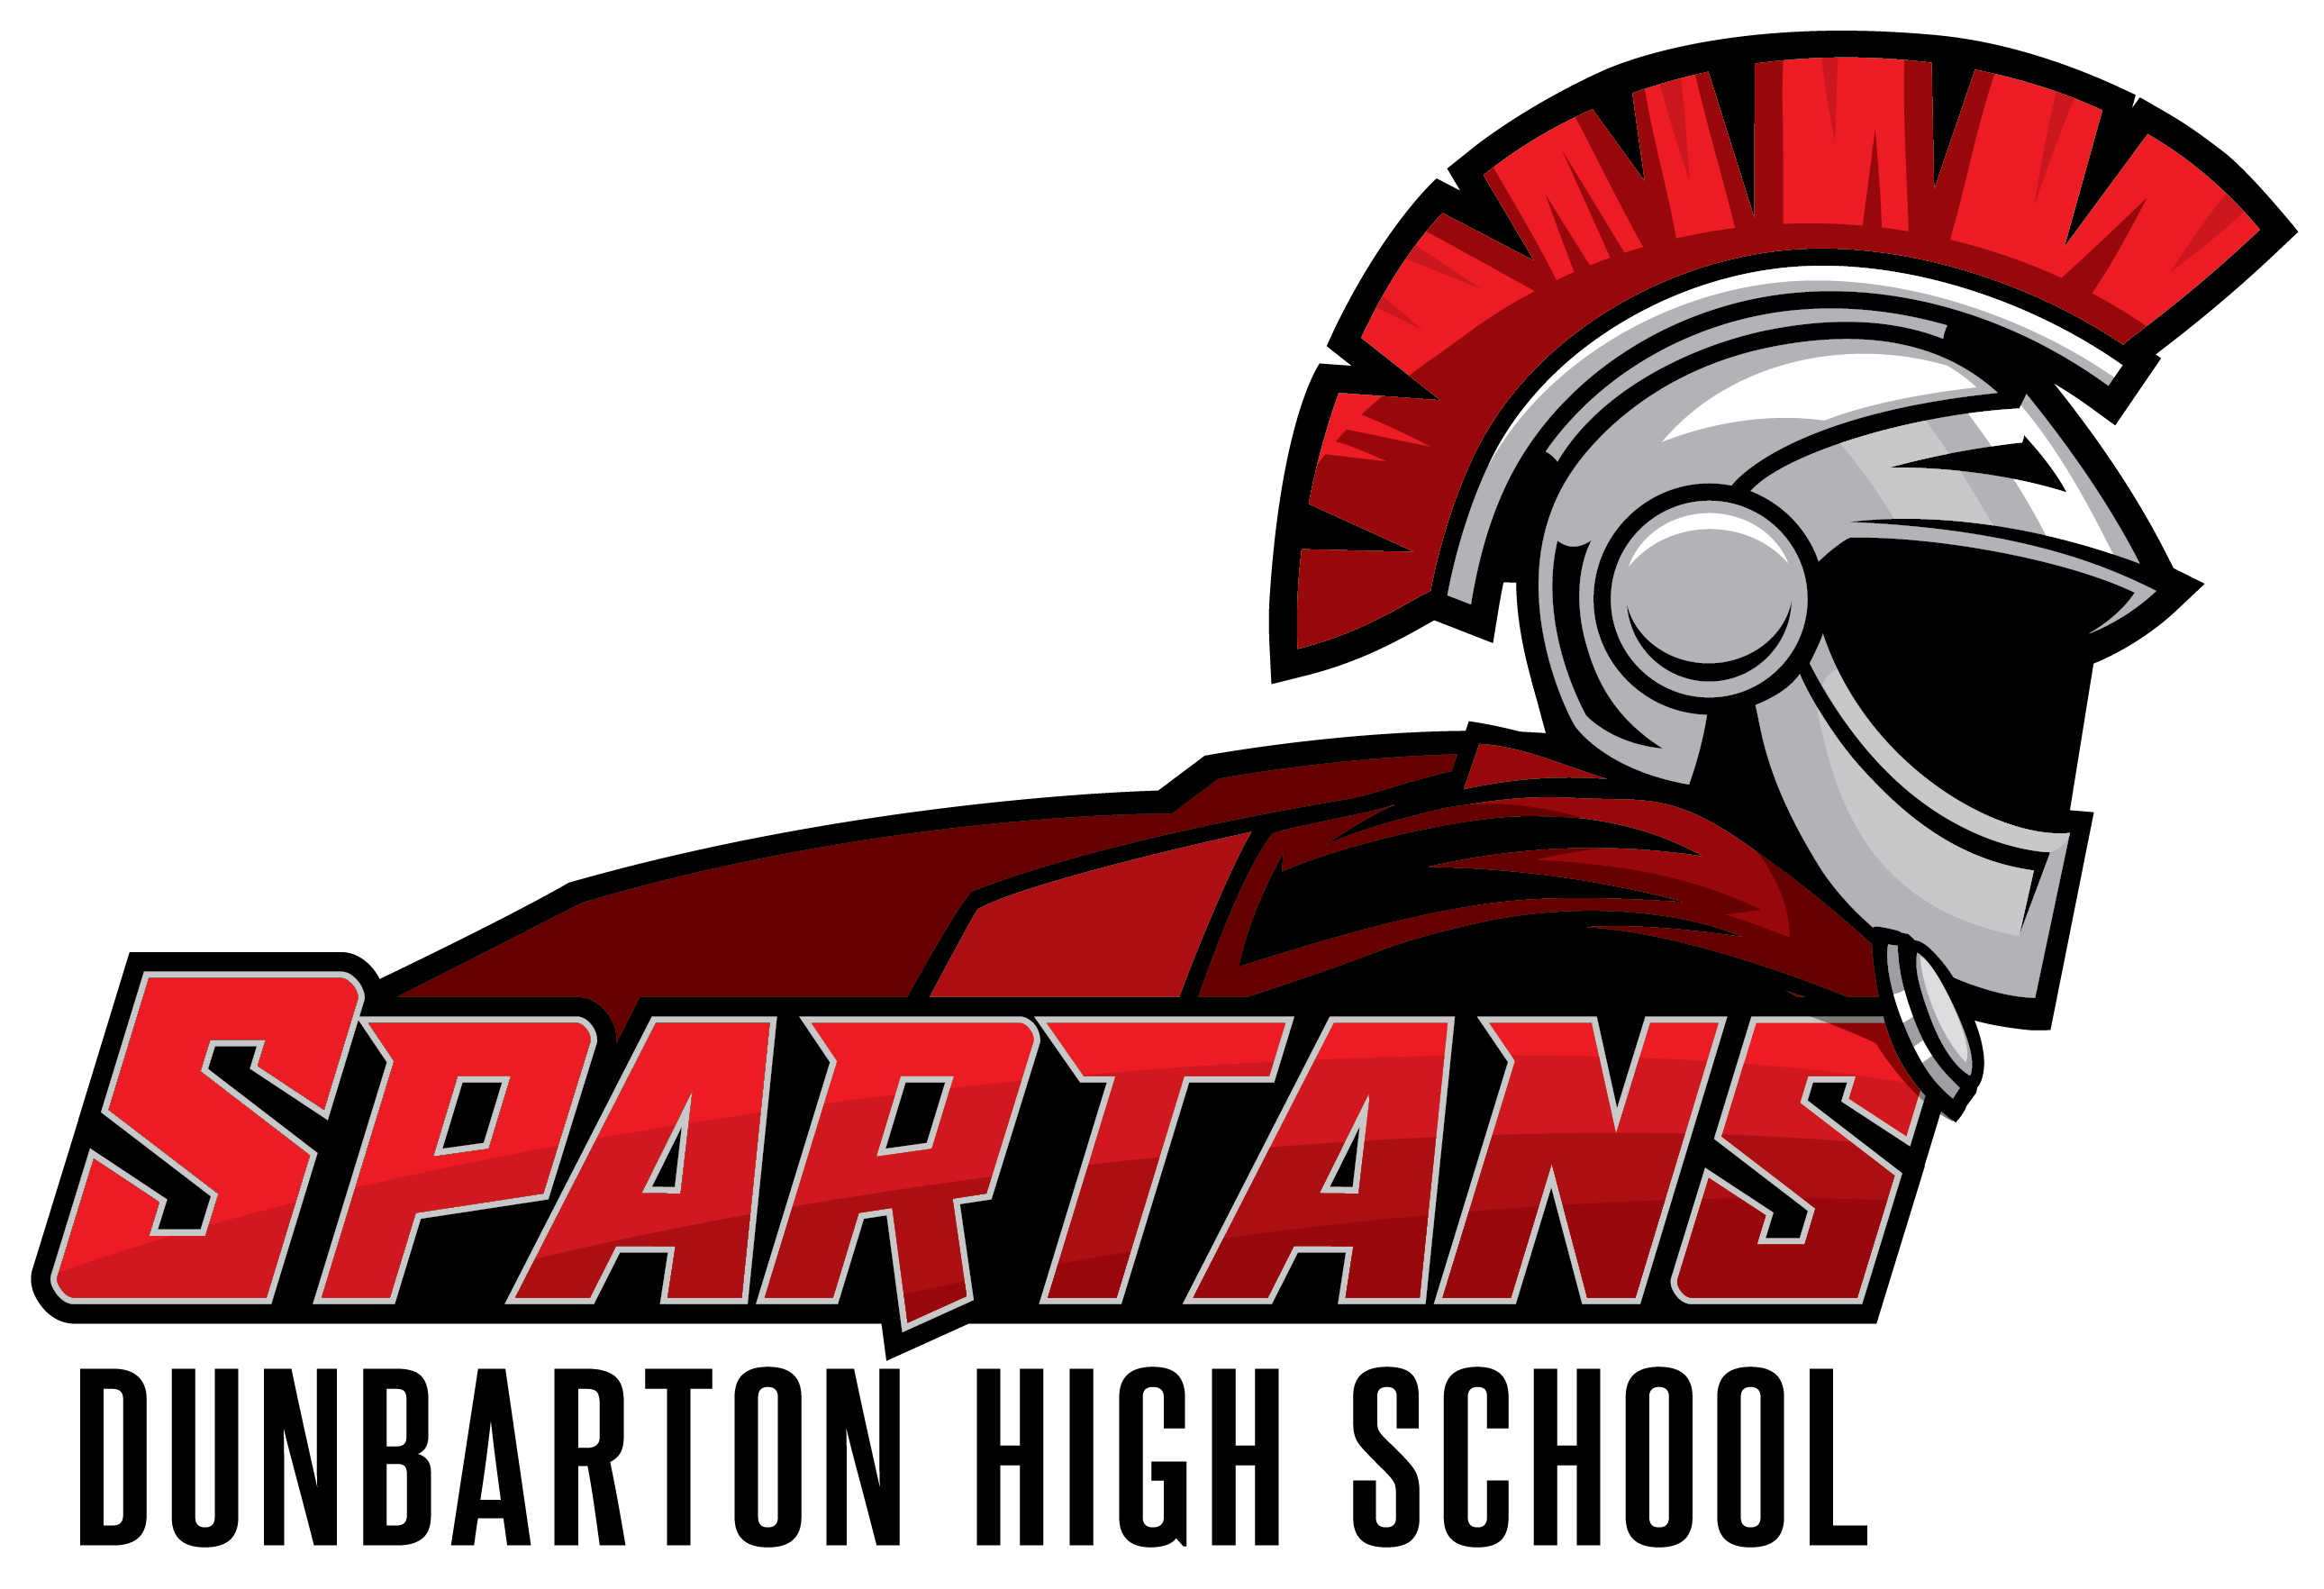 Dunbarton High School logo